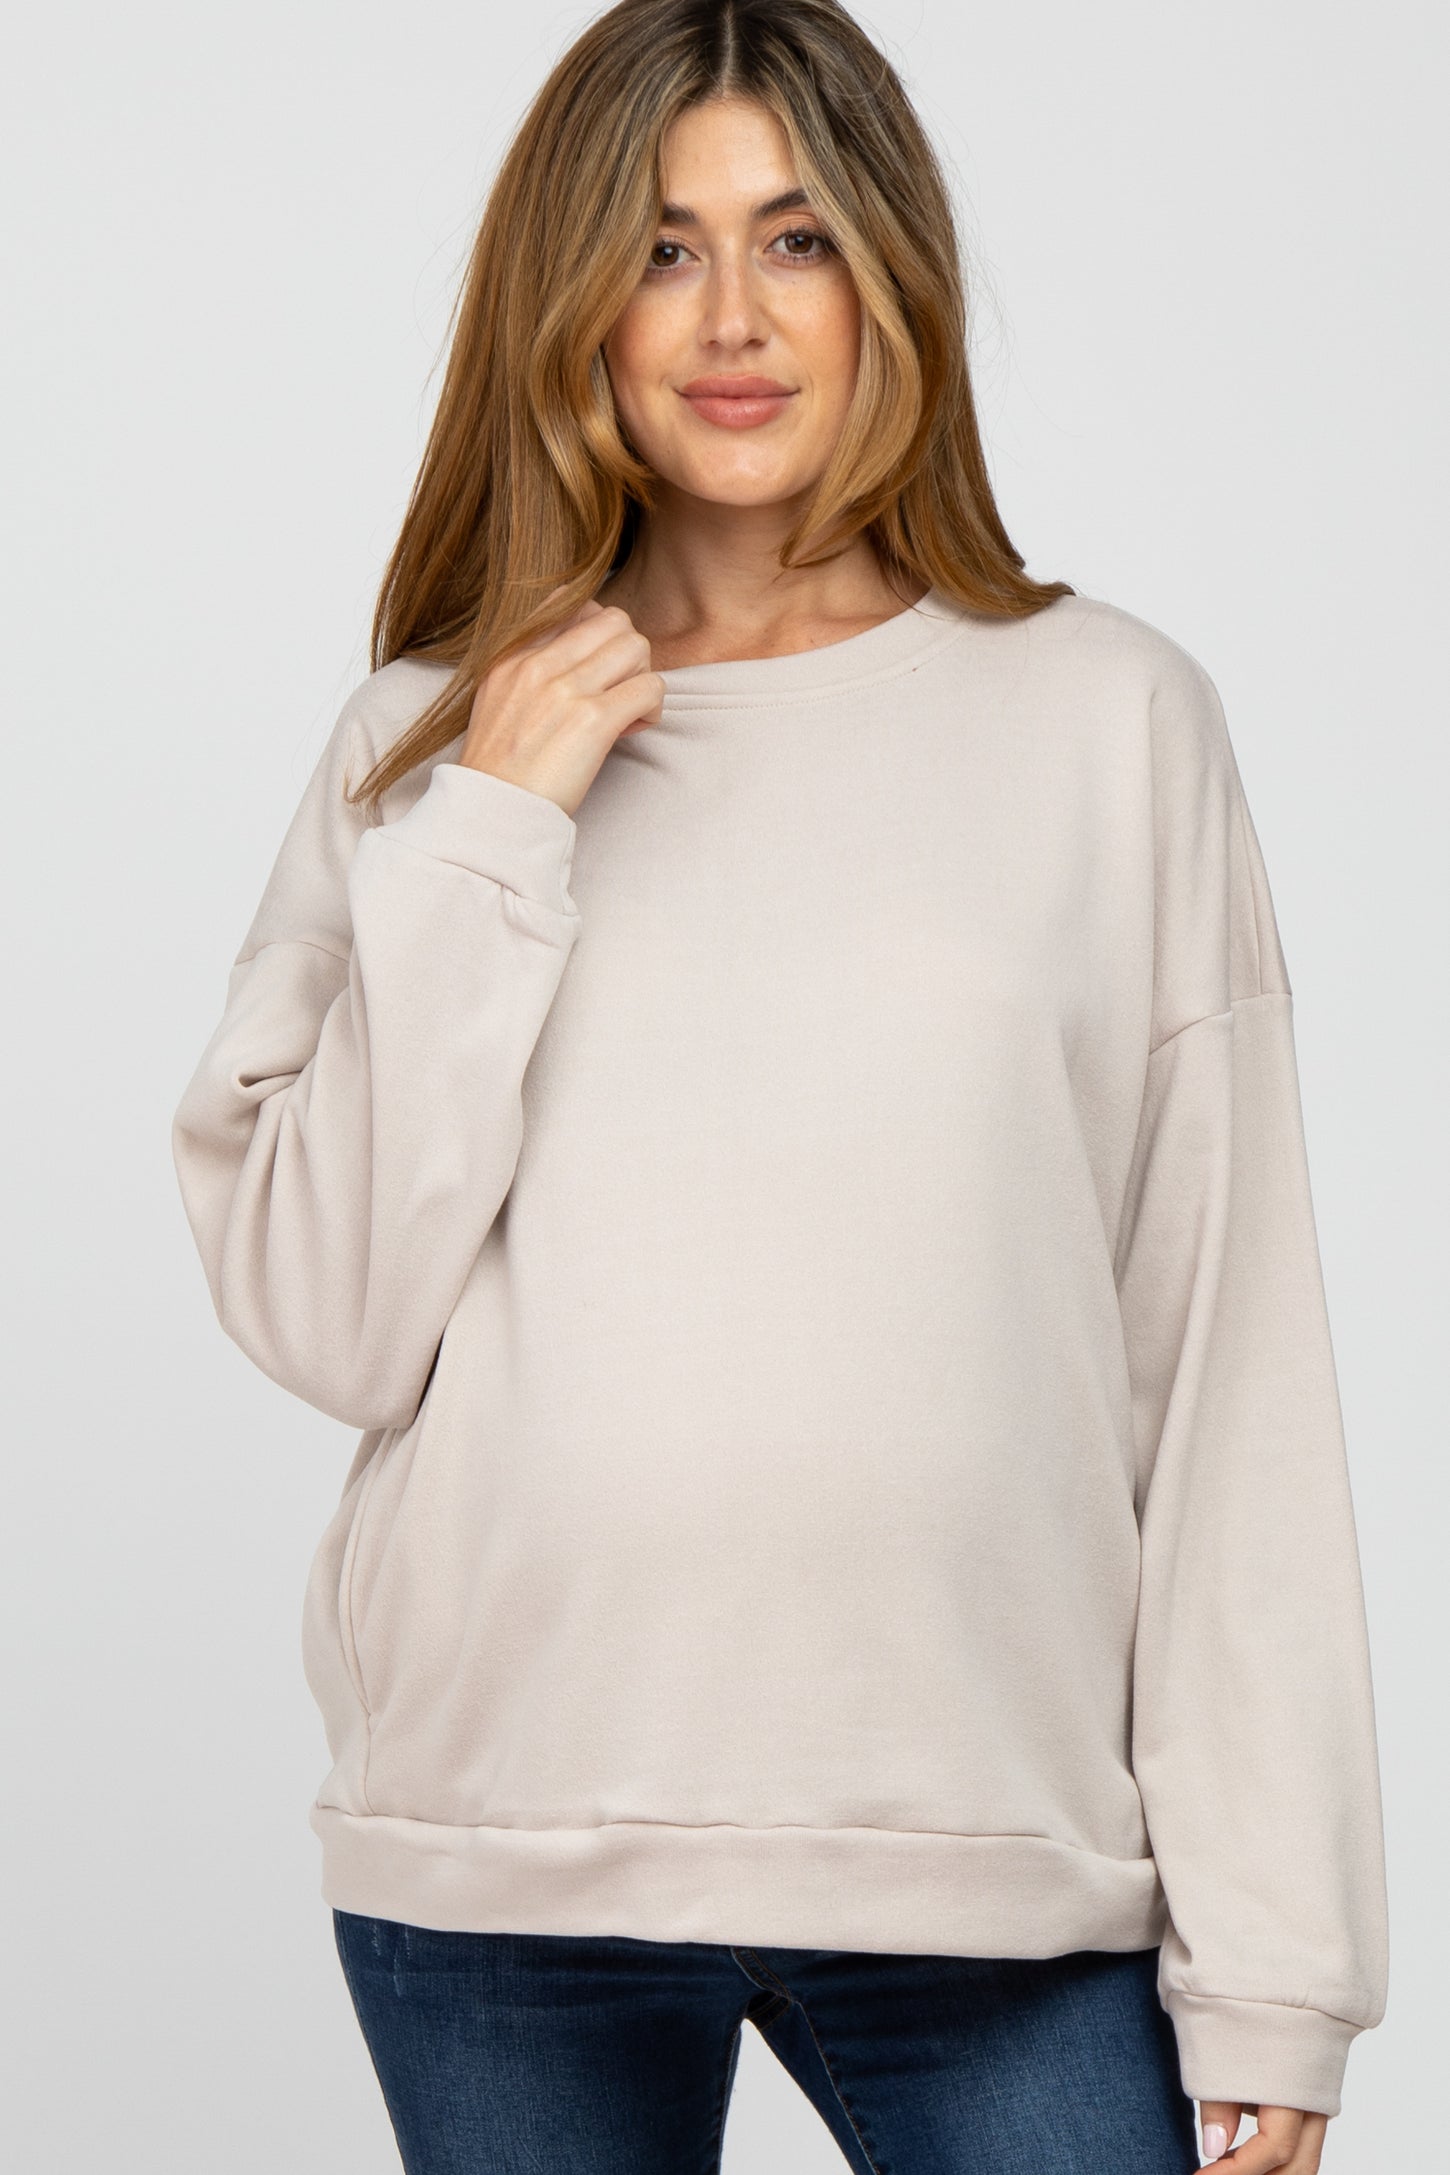 Beige Soft Fuzzy Lining Maternity Sweatshirt